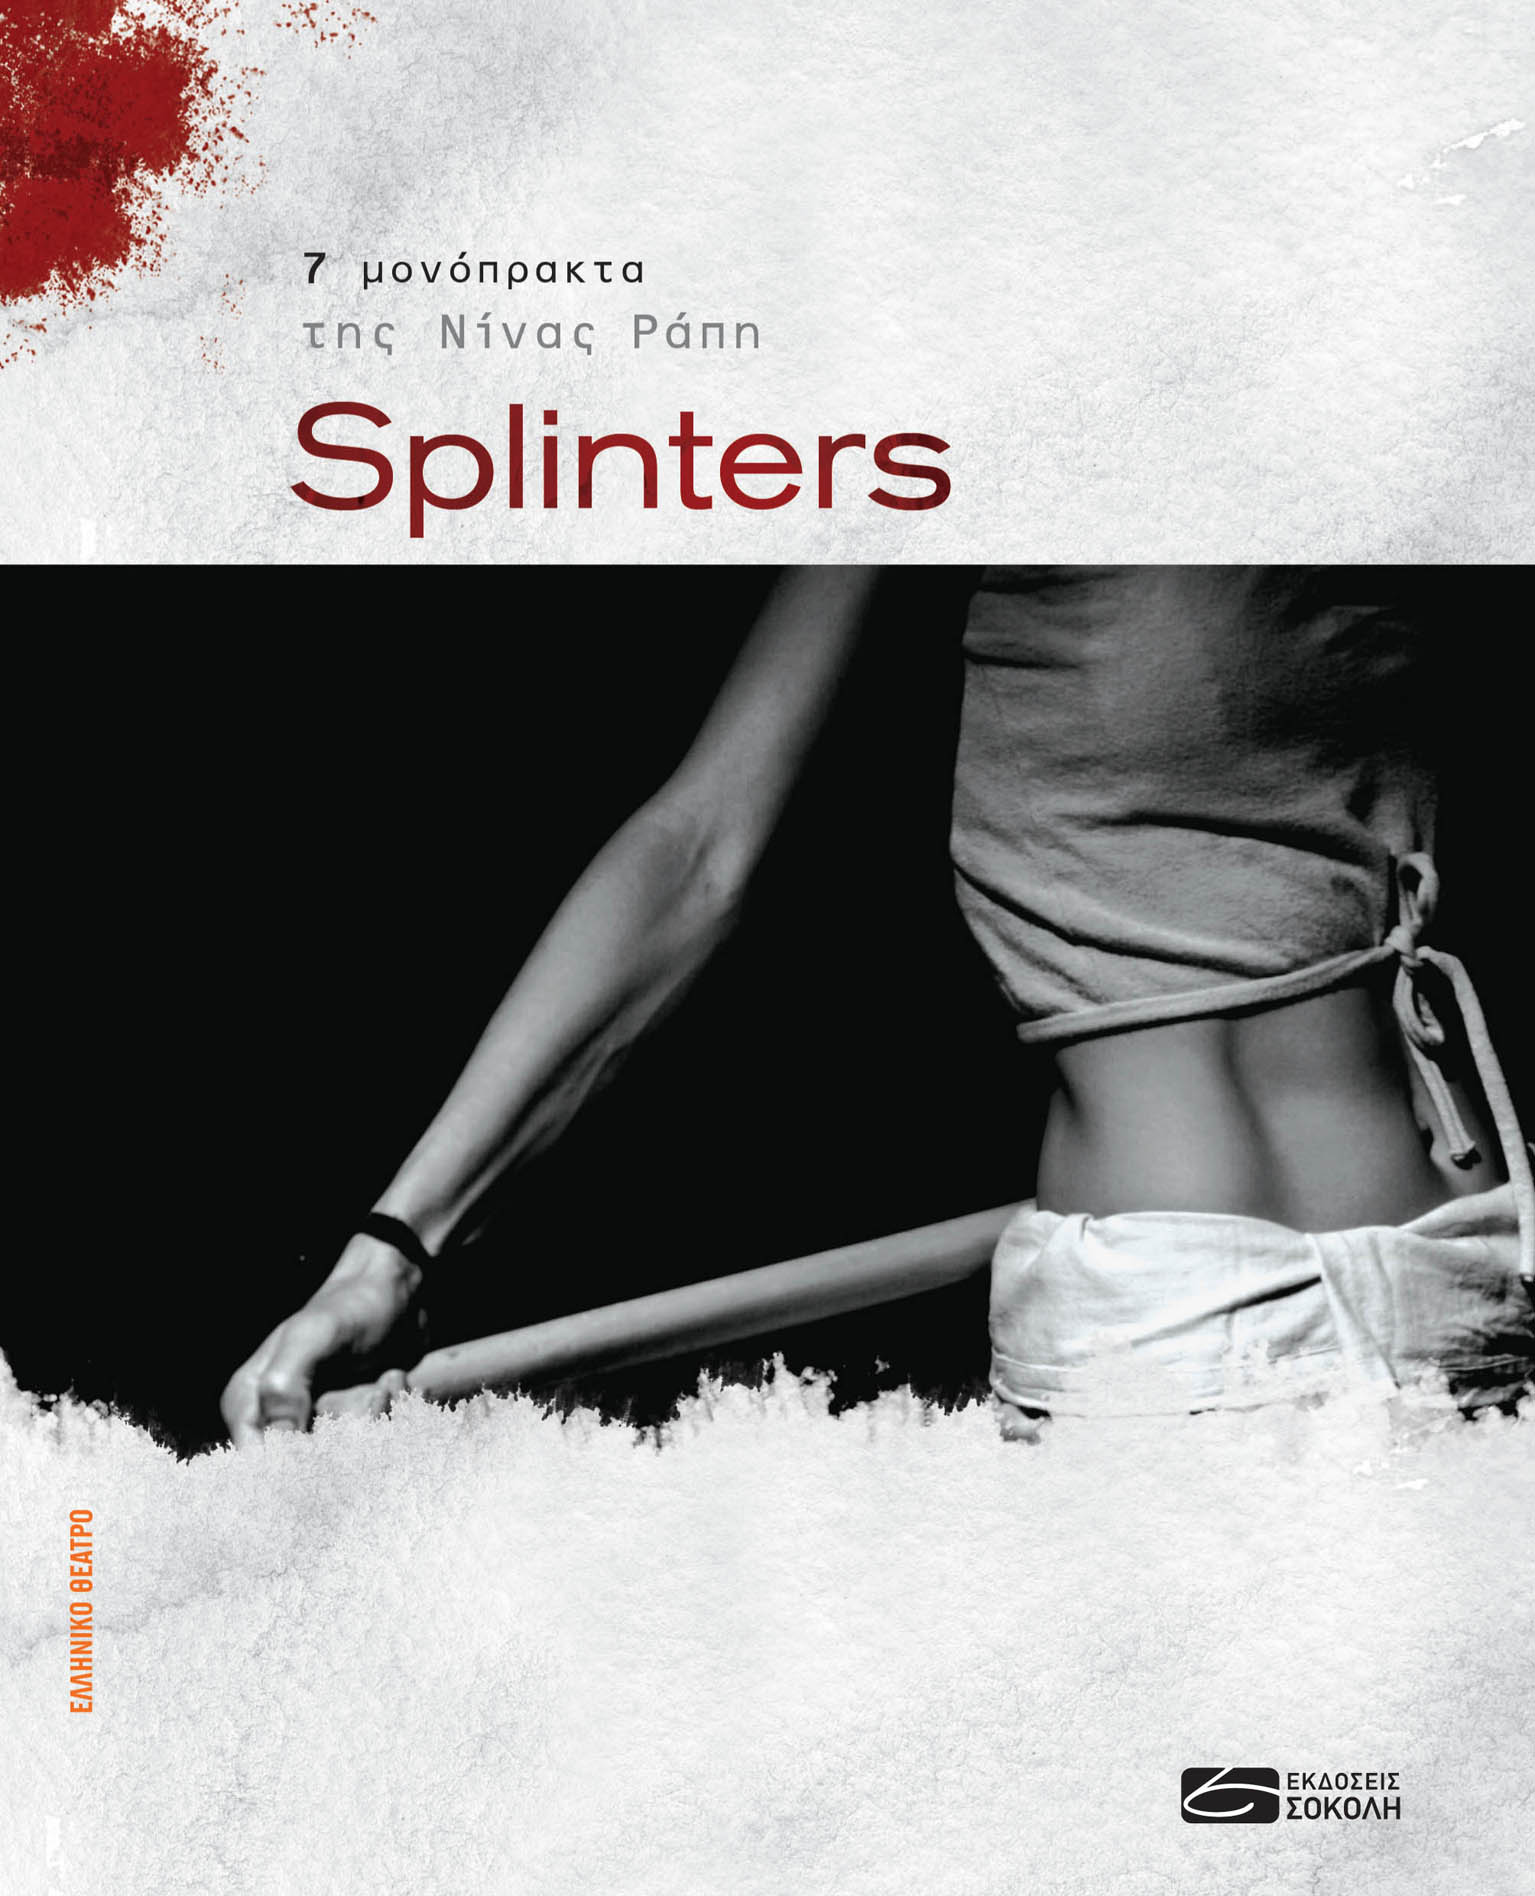 Splinters: Intimacy Bruising ή Η οδυνηρή ηδονή της συνύπαρξης, της Αμαλίας Κοντογιάννη. Εισαγωγή στο βιβλίο Splinters, 2017